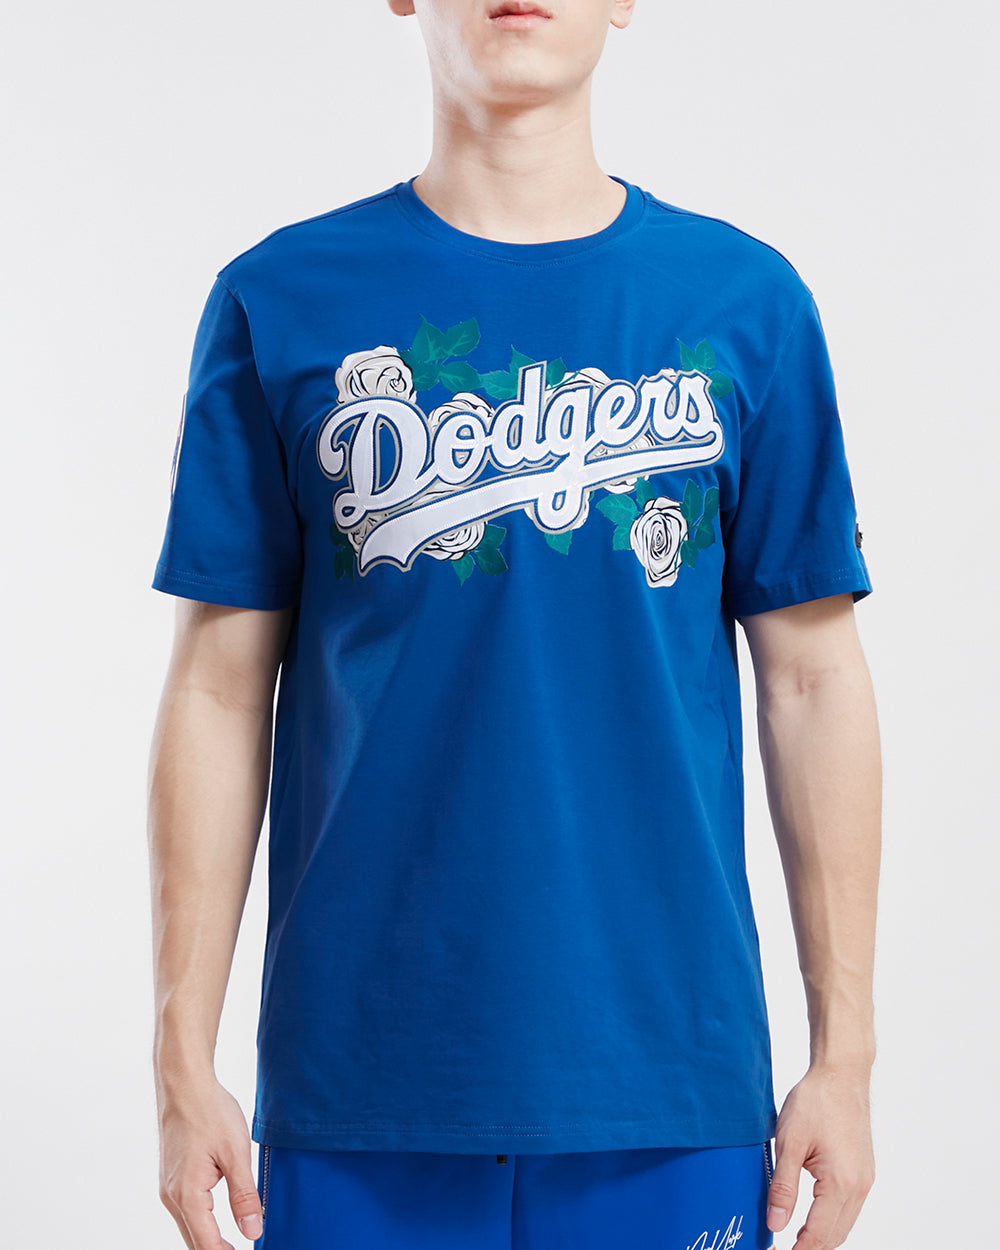 Los Angeles Dodgers Women Top Large Blue T-Shirt Logo Short Sleeve V Neck  Tee